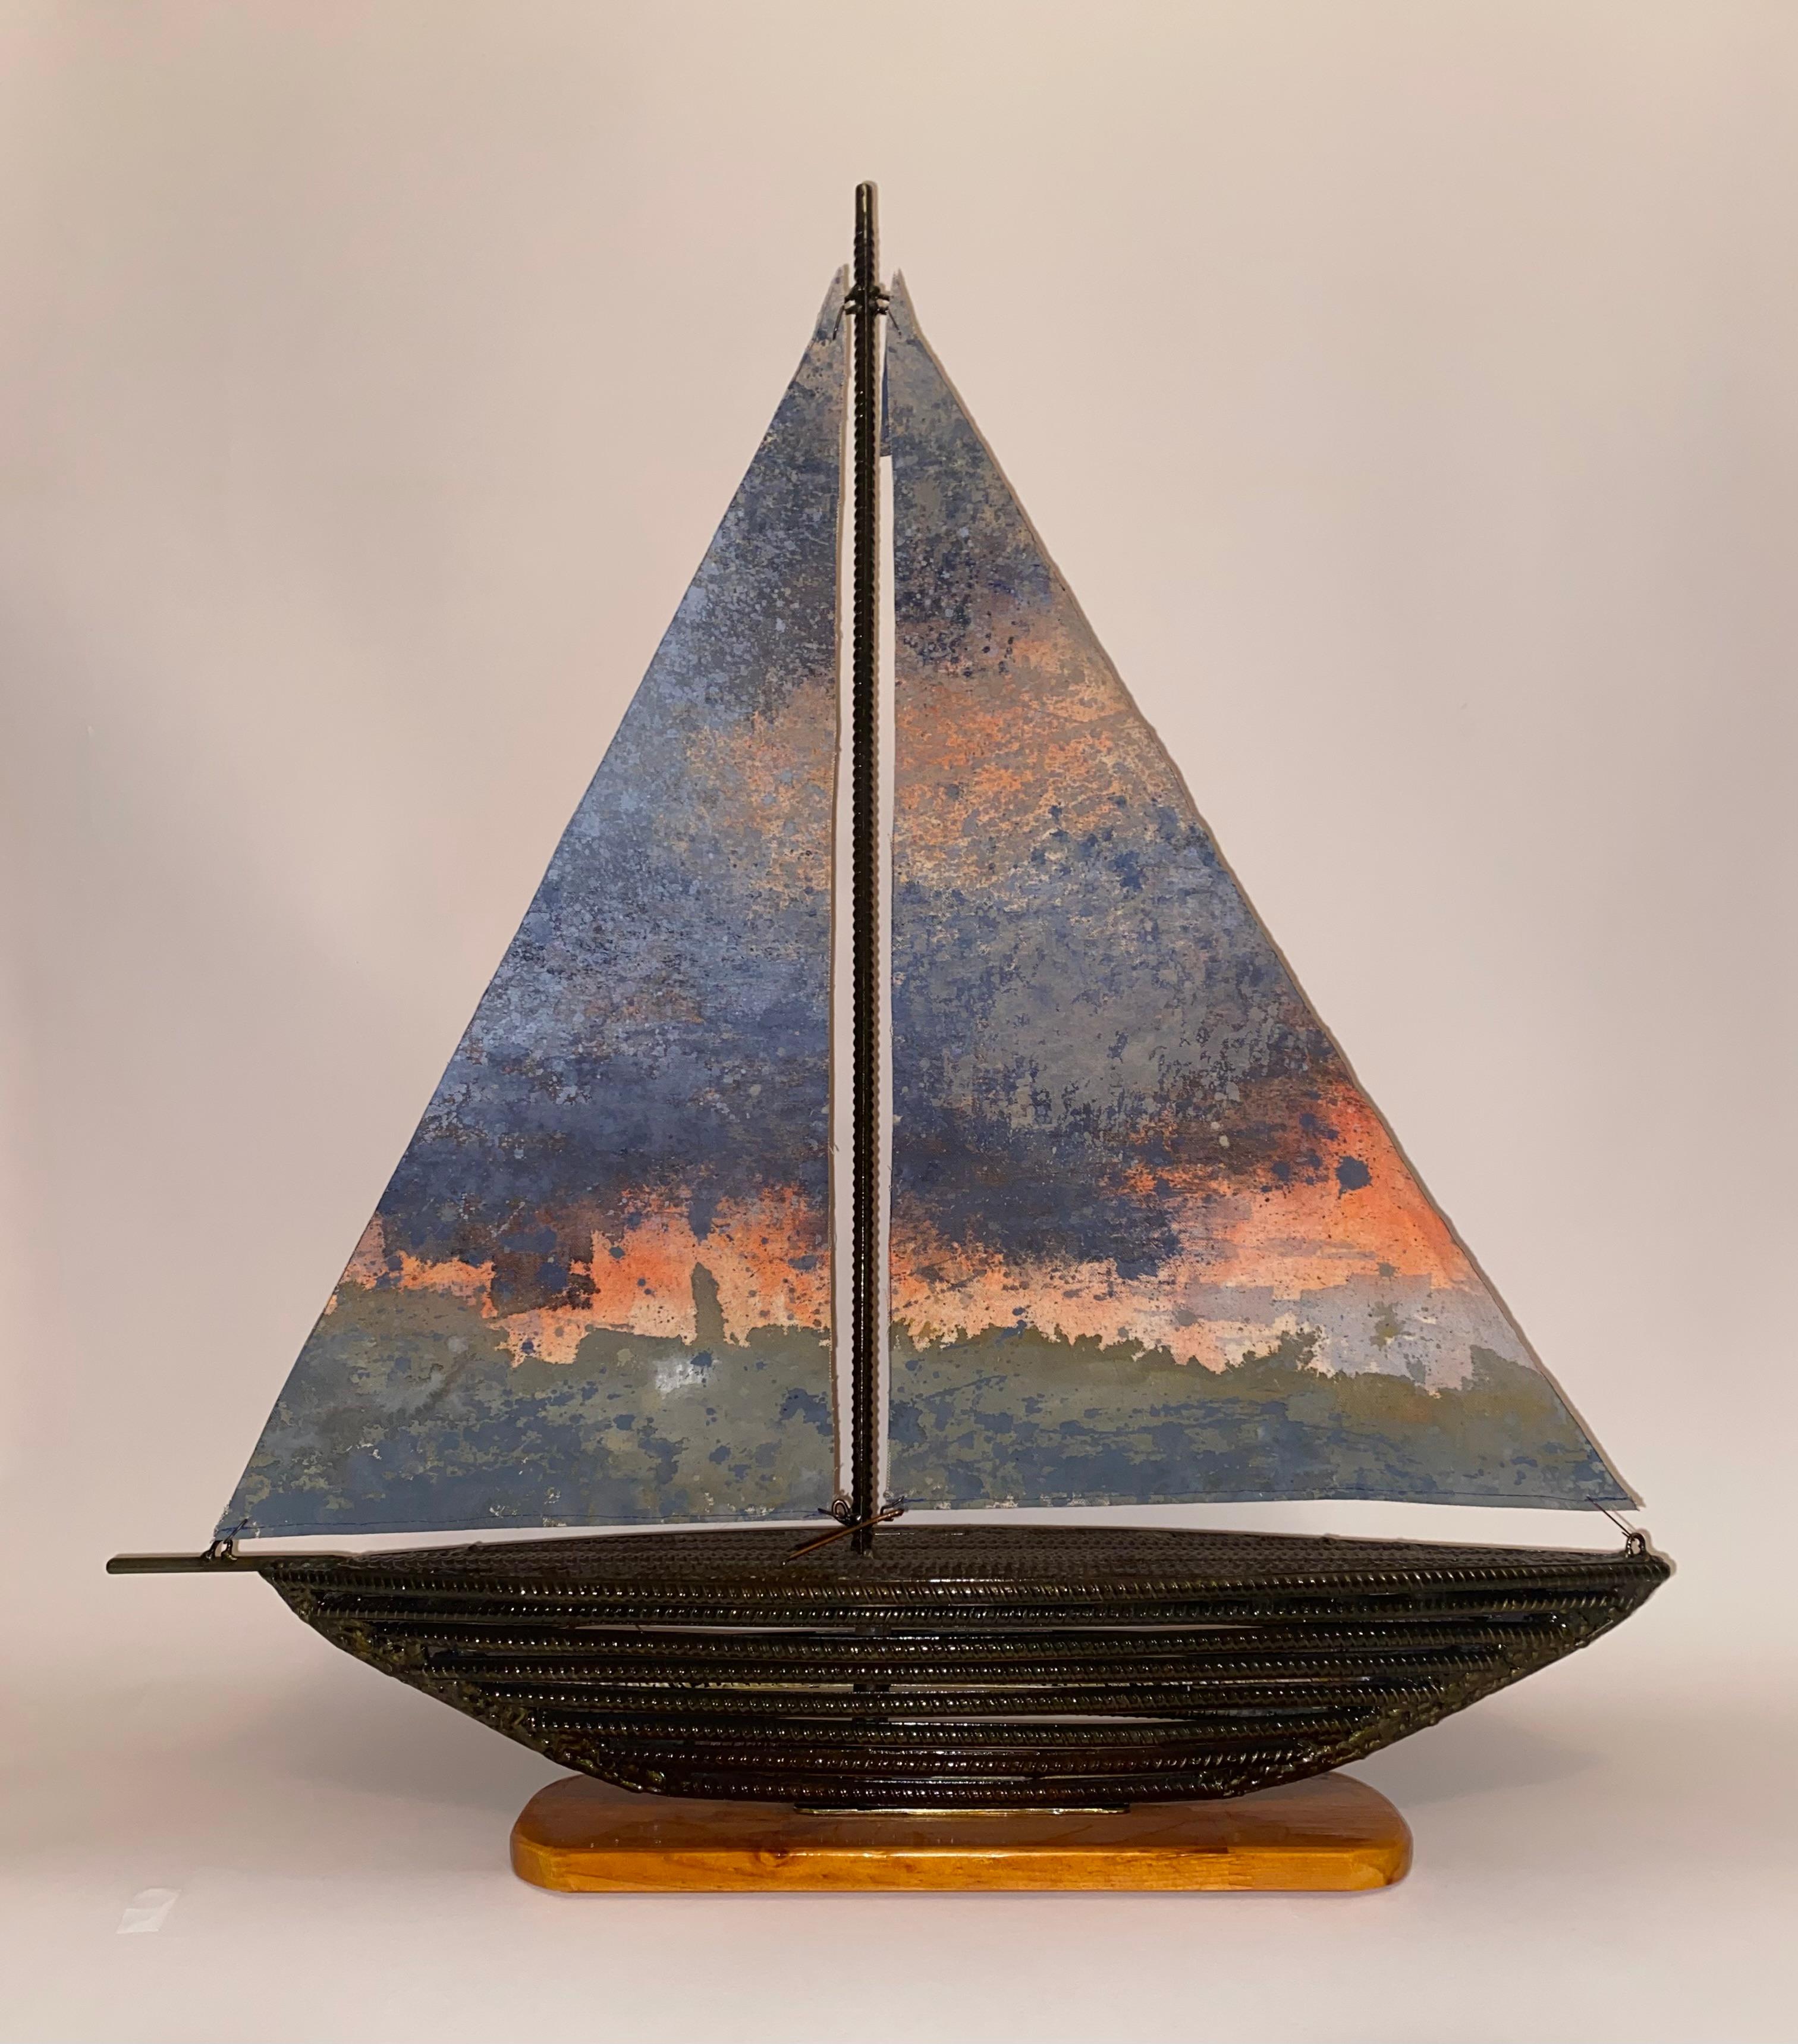 Pedro Villalta Still-Life Sculpture - Boat with Stormy Sail